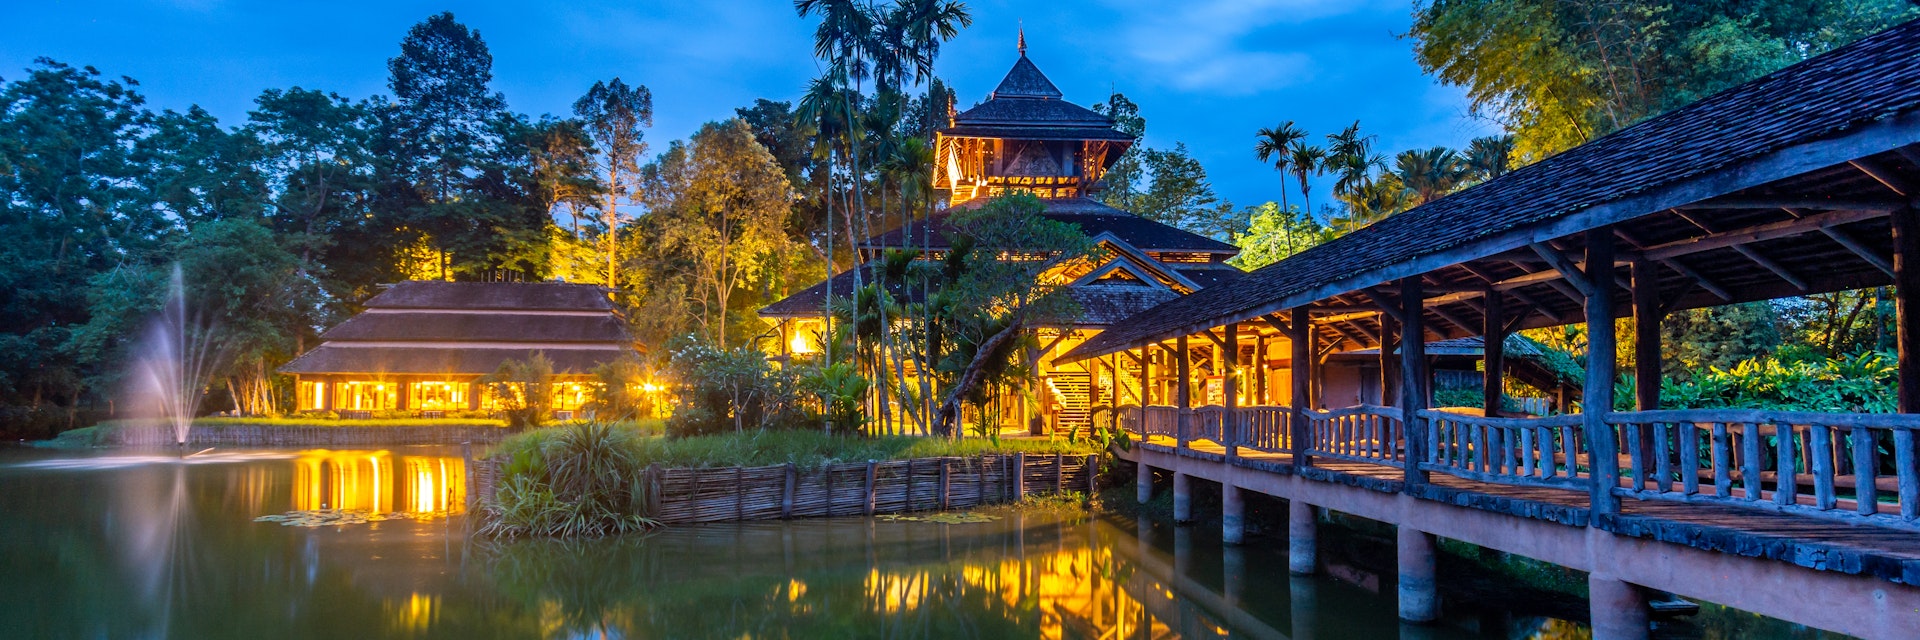 Mae Fah Luang Art and Culture Park in Chiang Rai, Thailand.